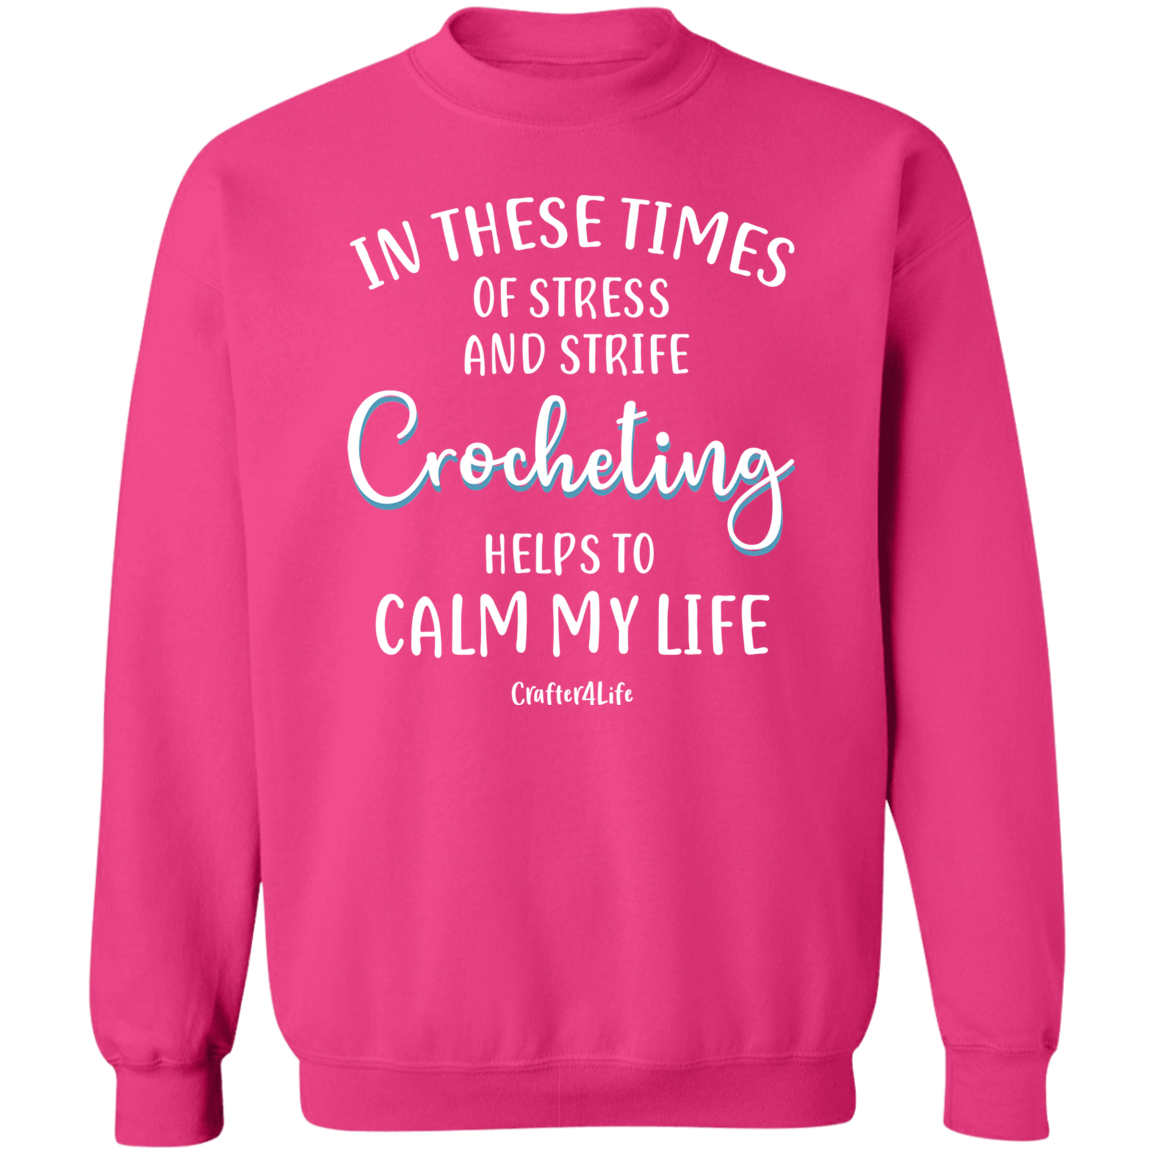 Crocheting Helps to Calm My Life Crewneck Pullover Sweatshirt